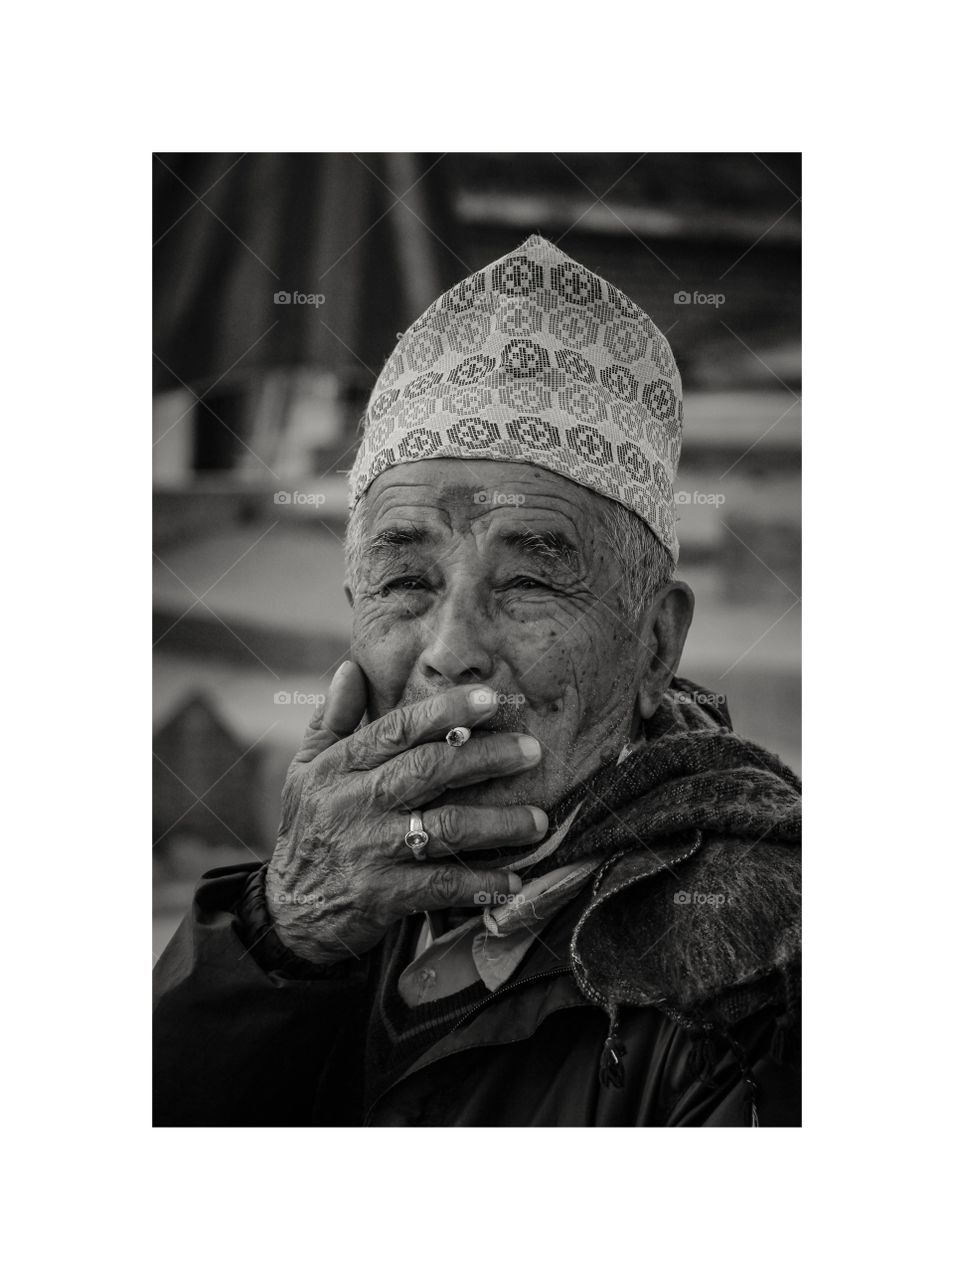 #oldman #potrait #potraitnepal